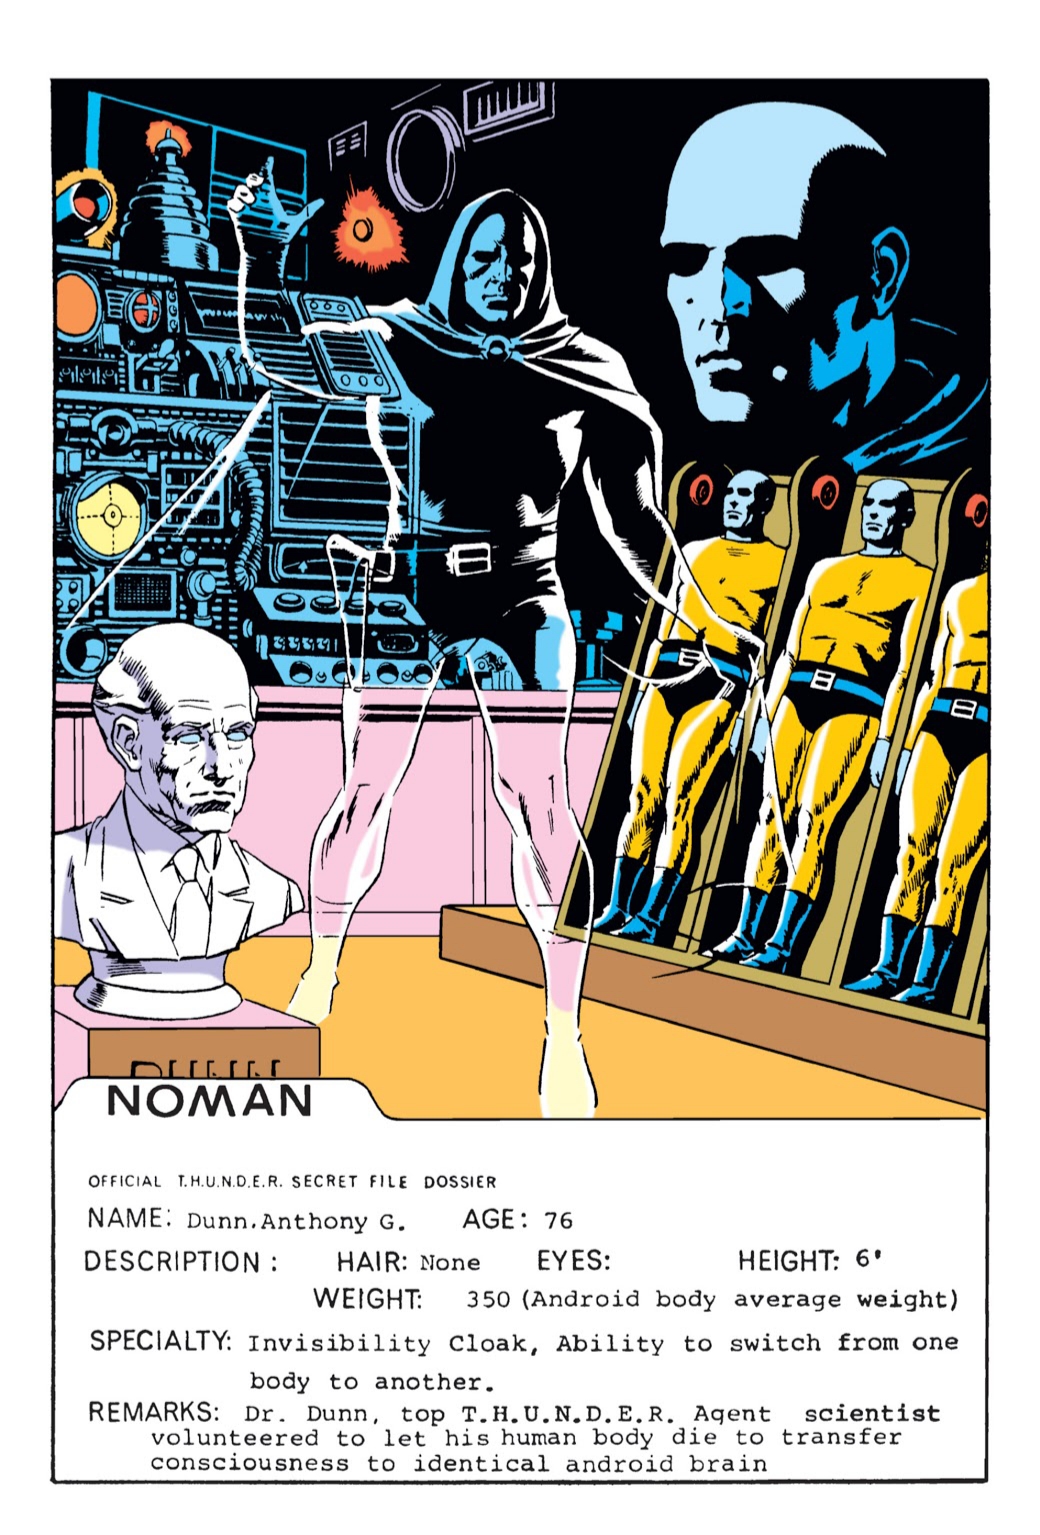 Five Superhero Teams That Almost Could: Part III - Top Hat Comics